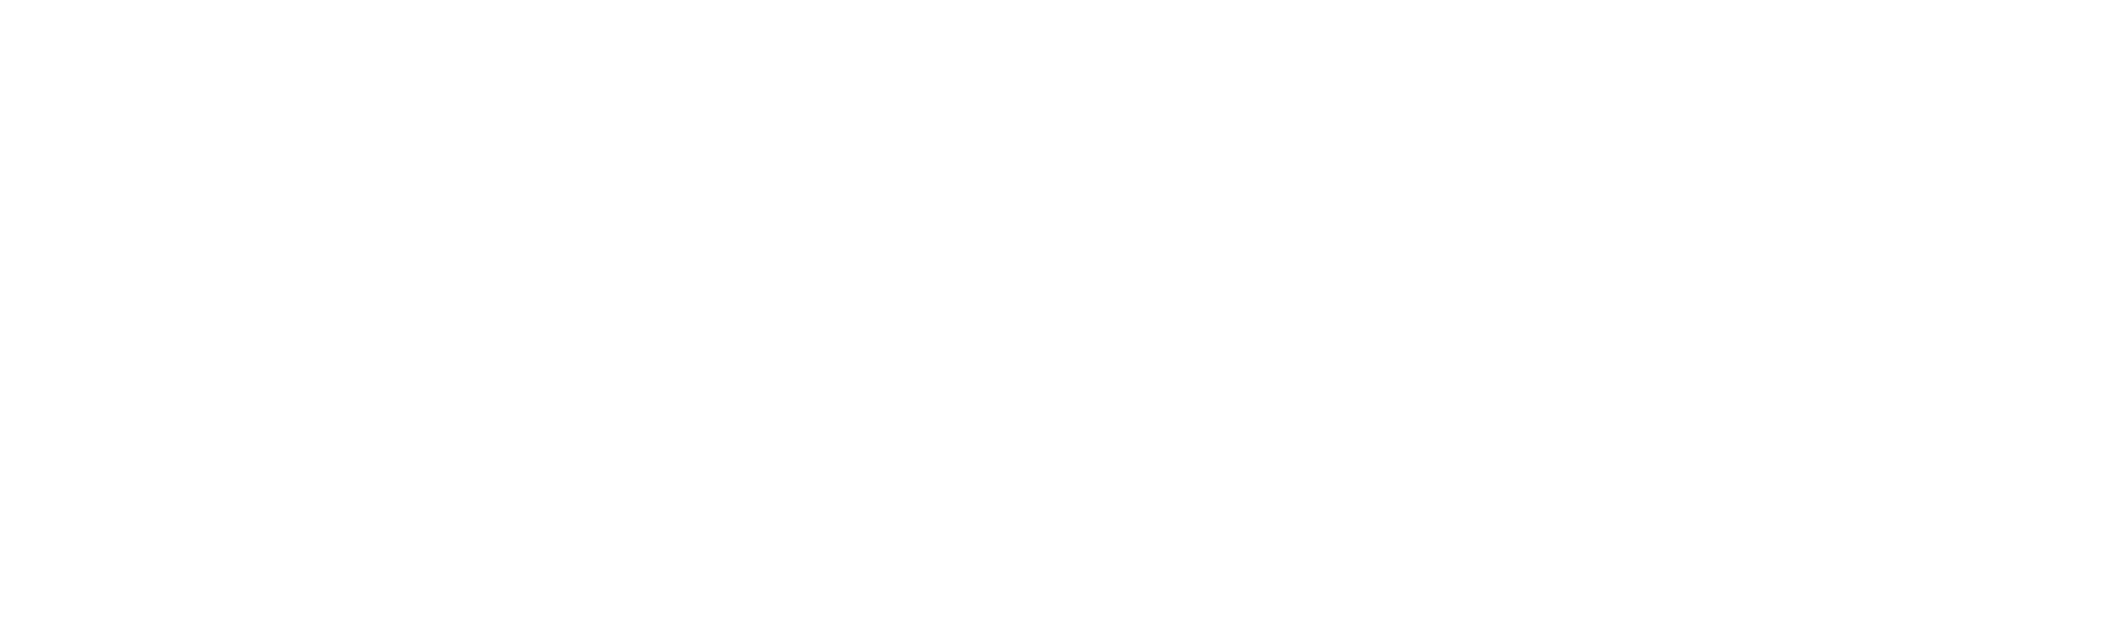 chambers5-01